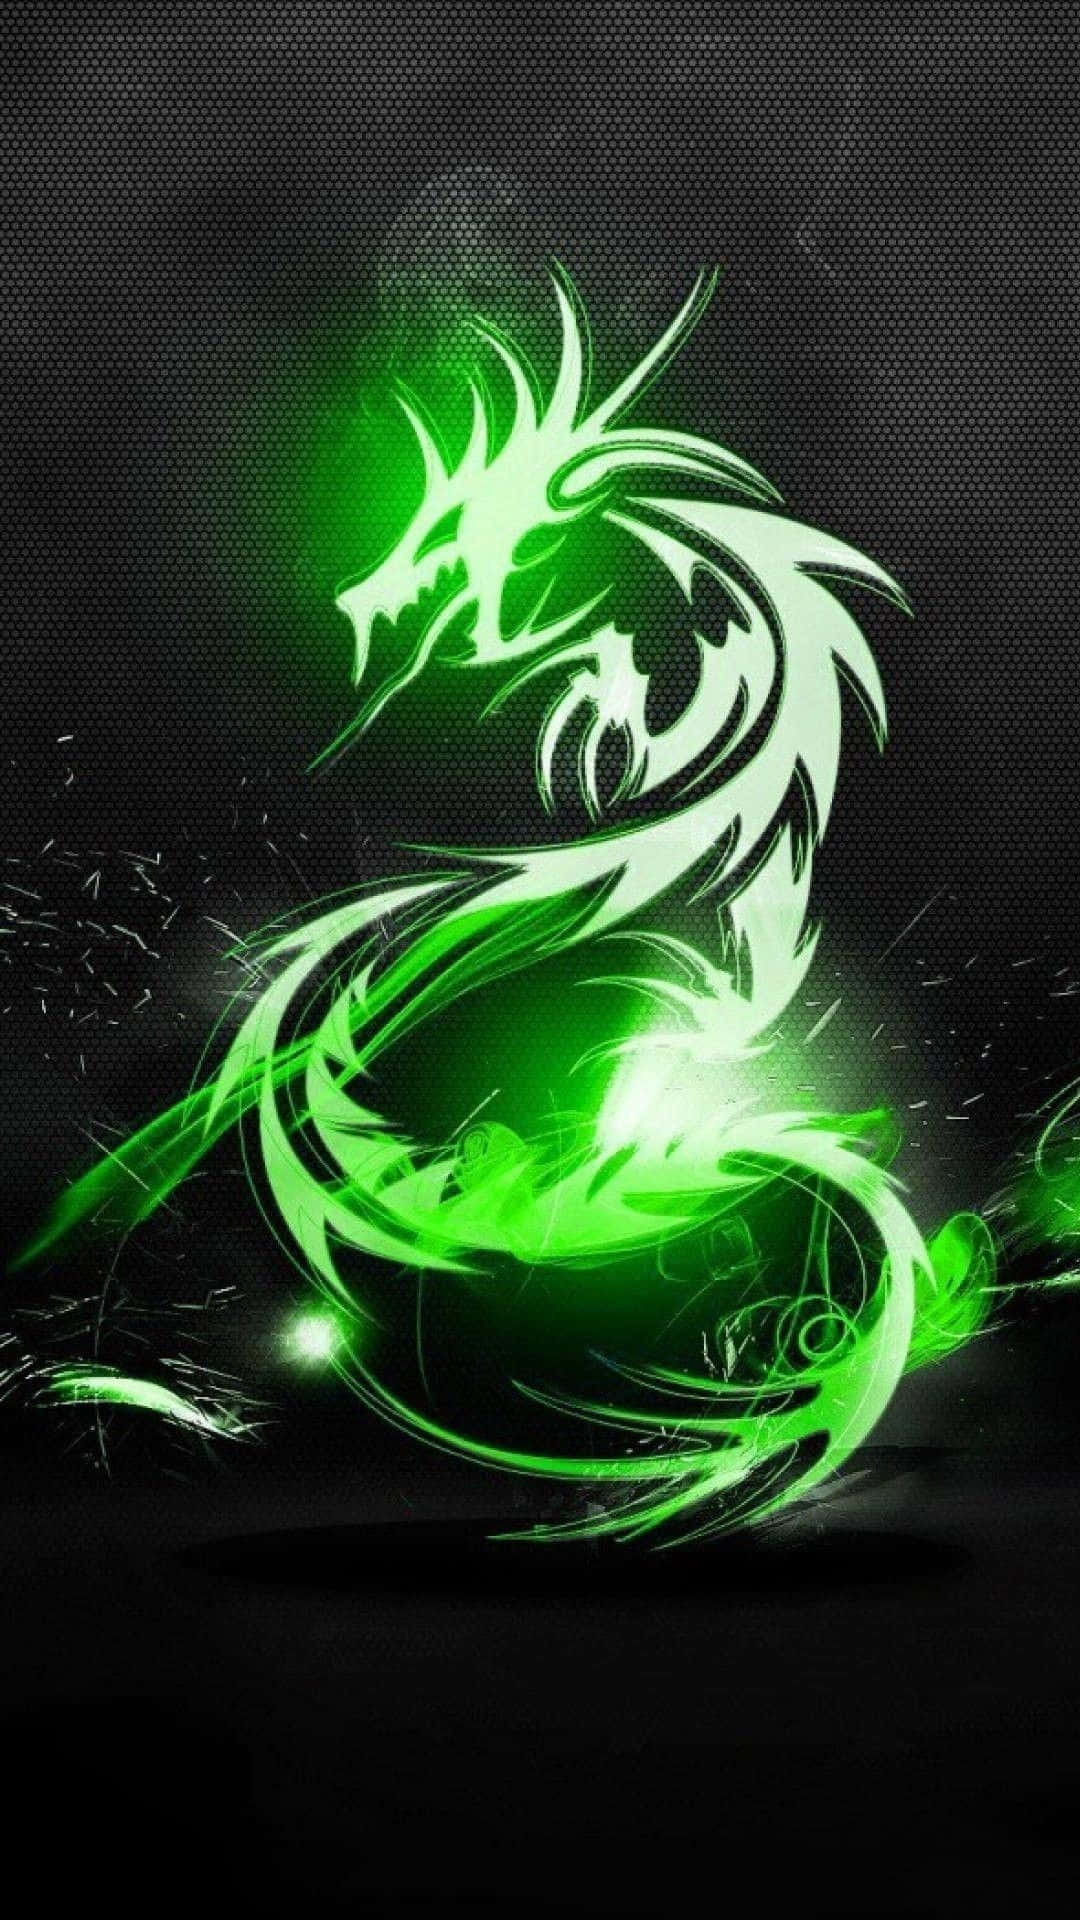 Awesome Cool Neon Green Dragon Wallpaper